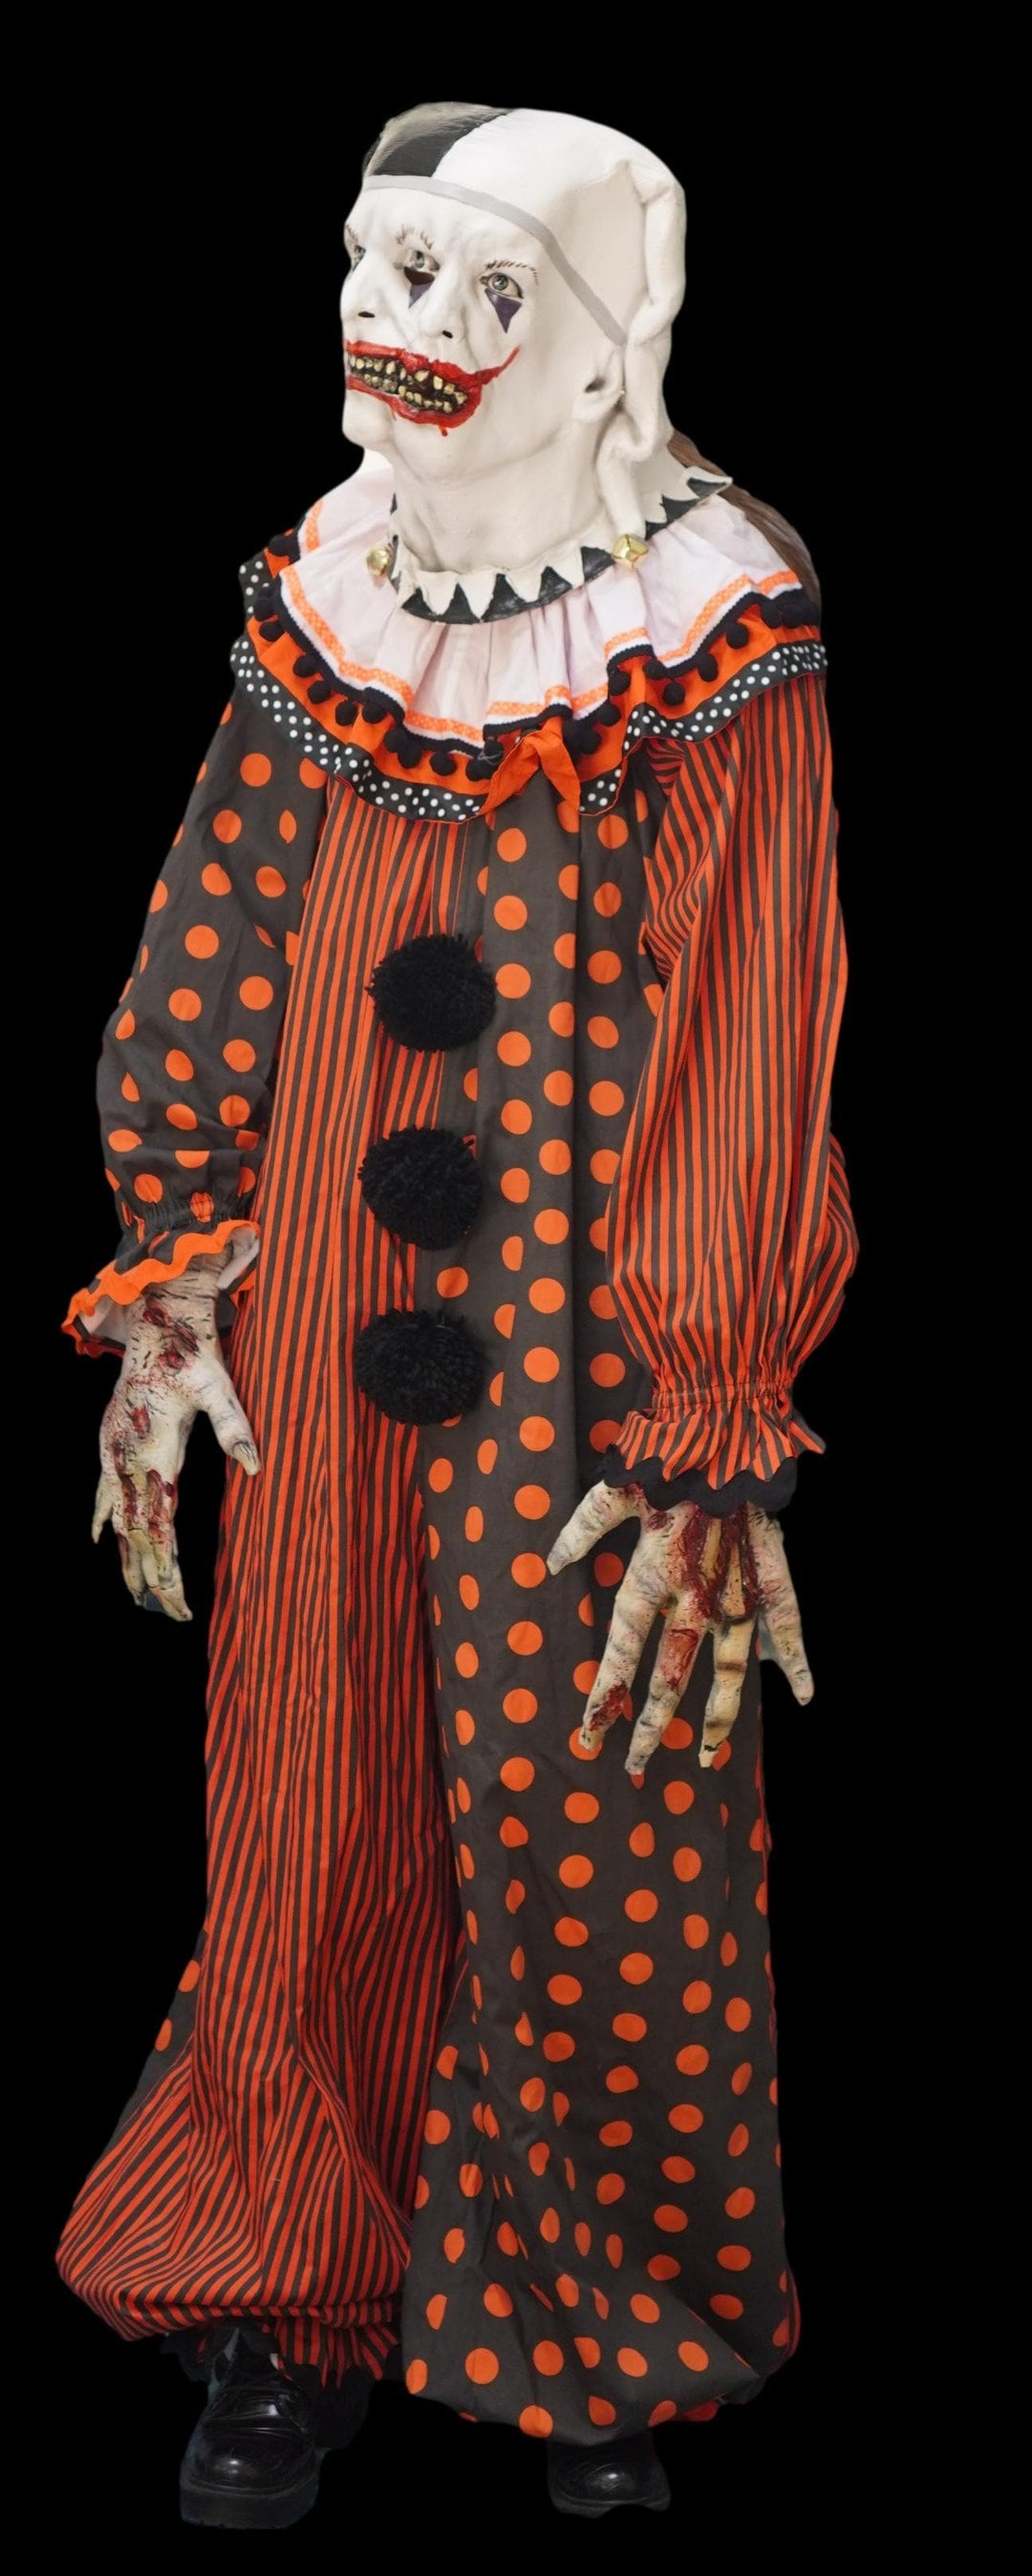 scary girl clown costume